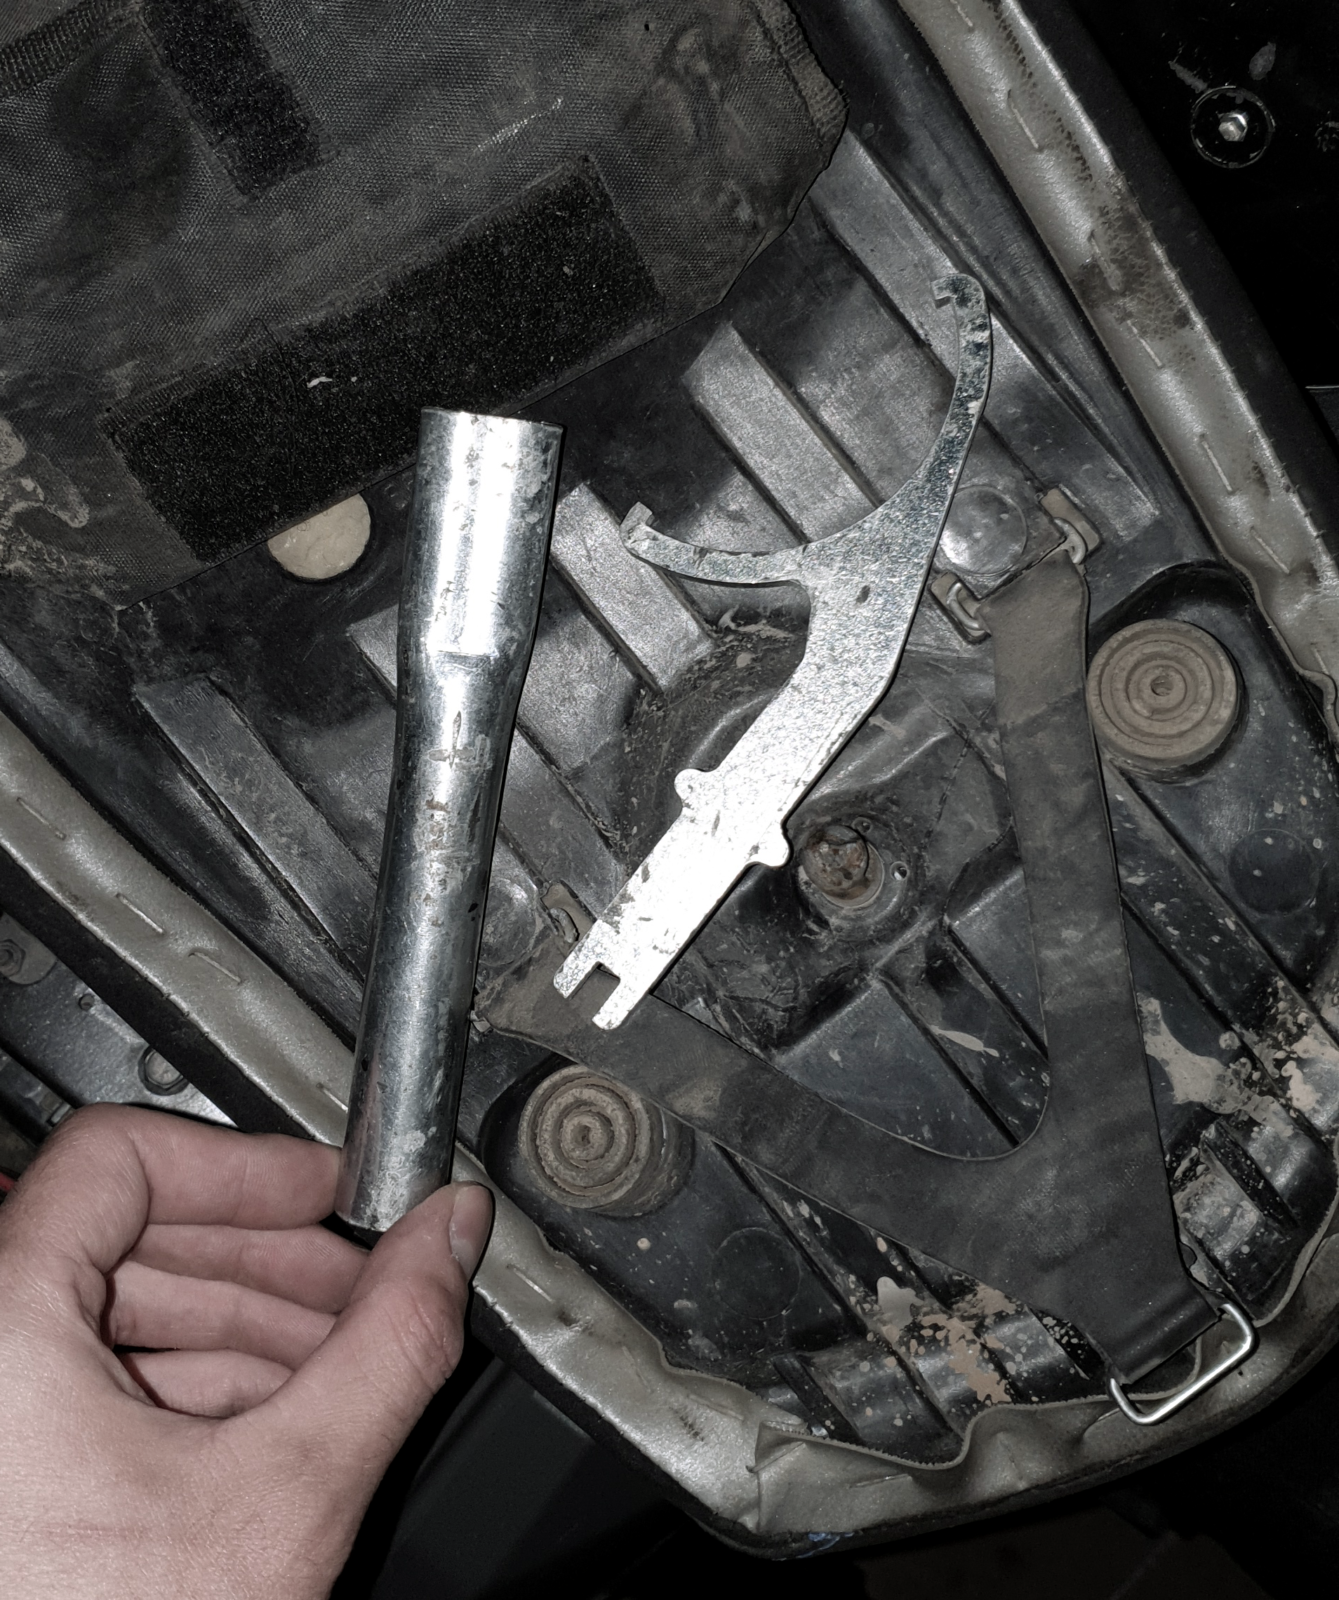 Tools for adjusting motorcycle sag